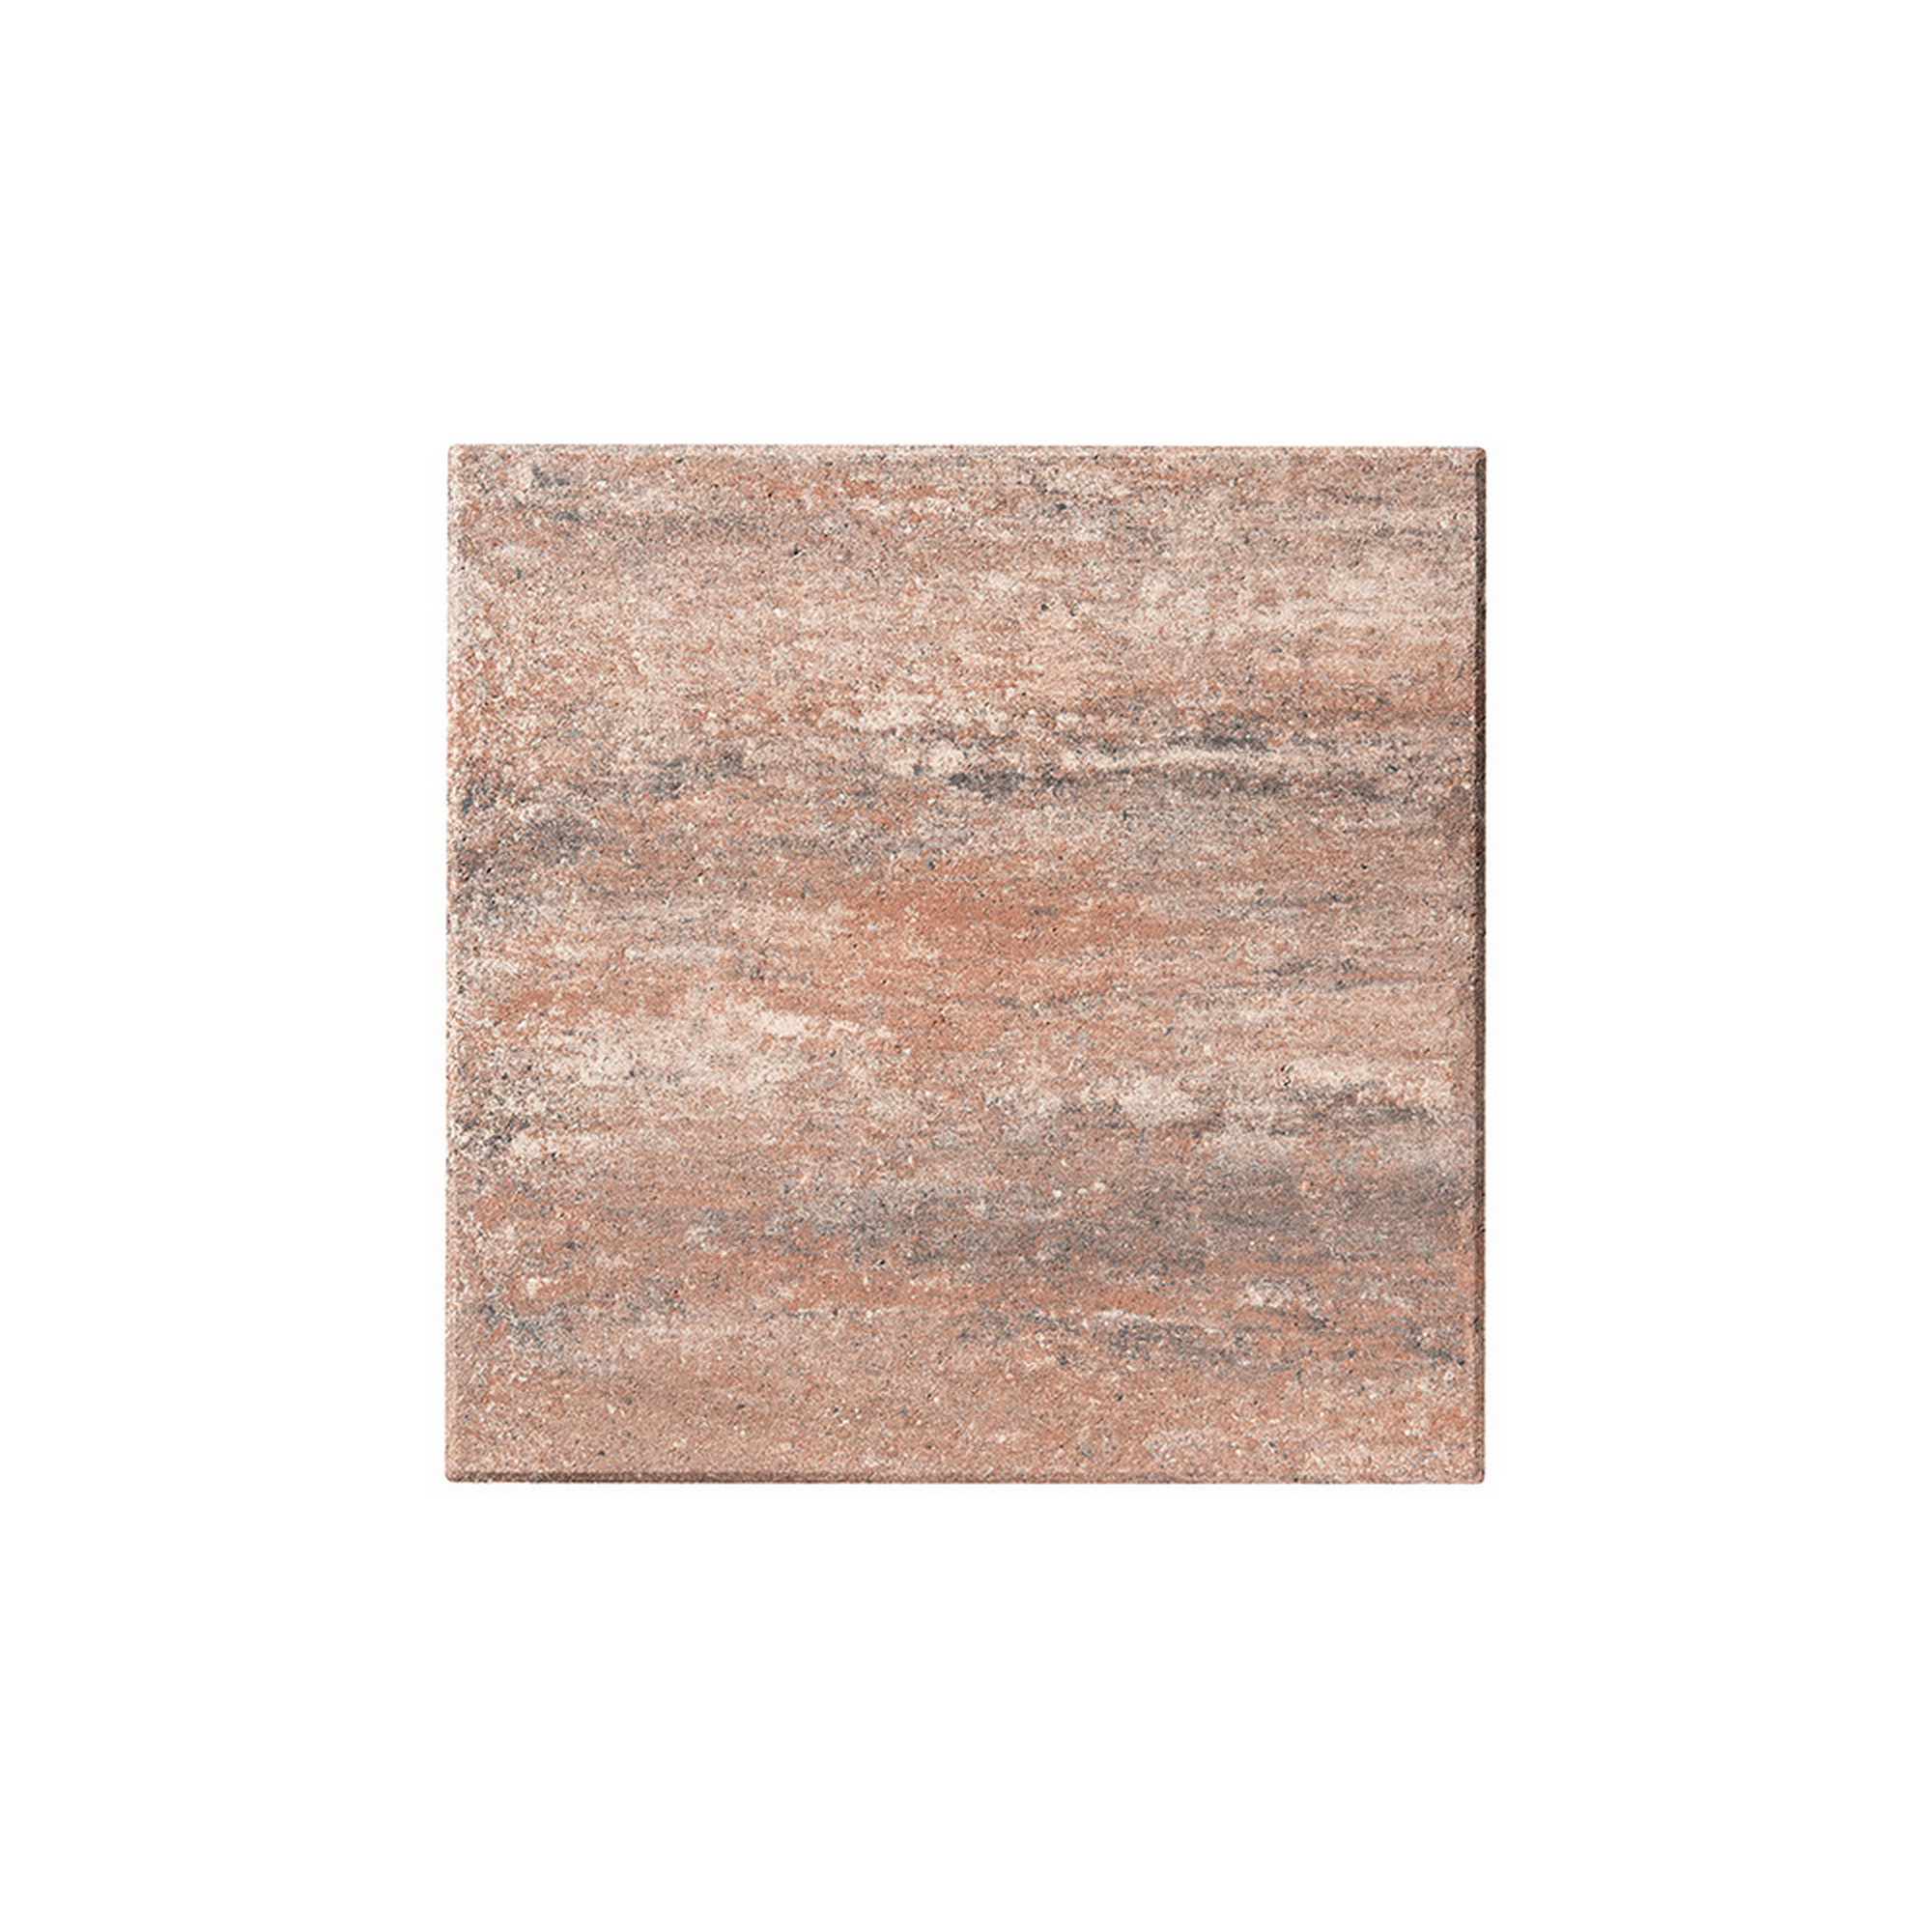 Terrassenplatte 'T-Court Live' Beton muschelbeige 40 x 40 x 4 cm + product picture